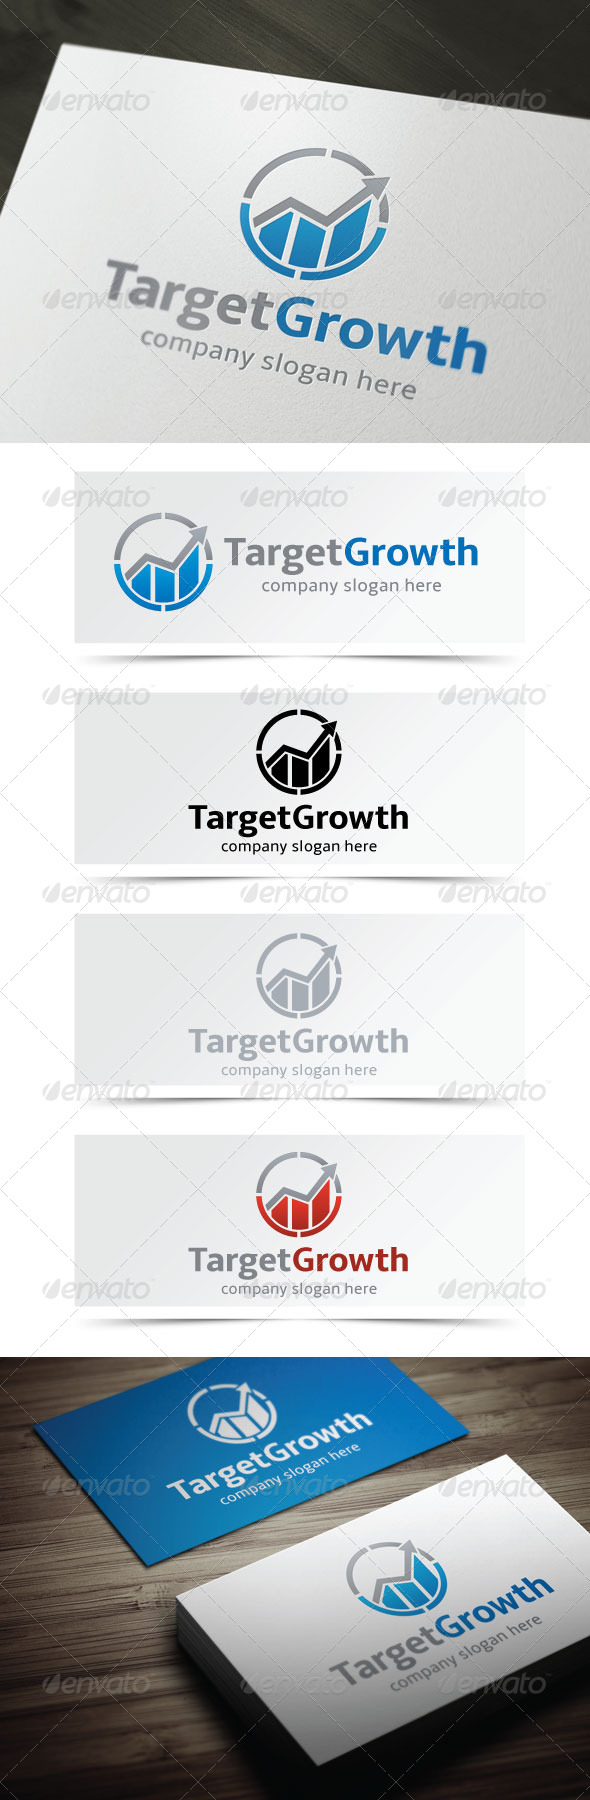 Target Growth